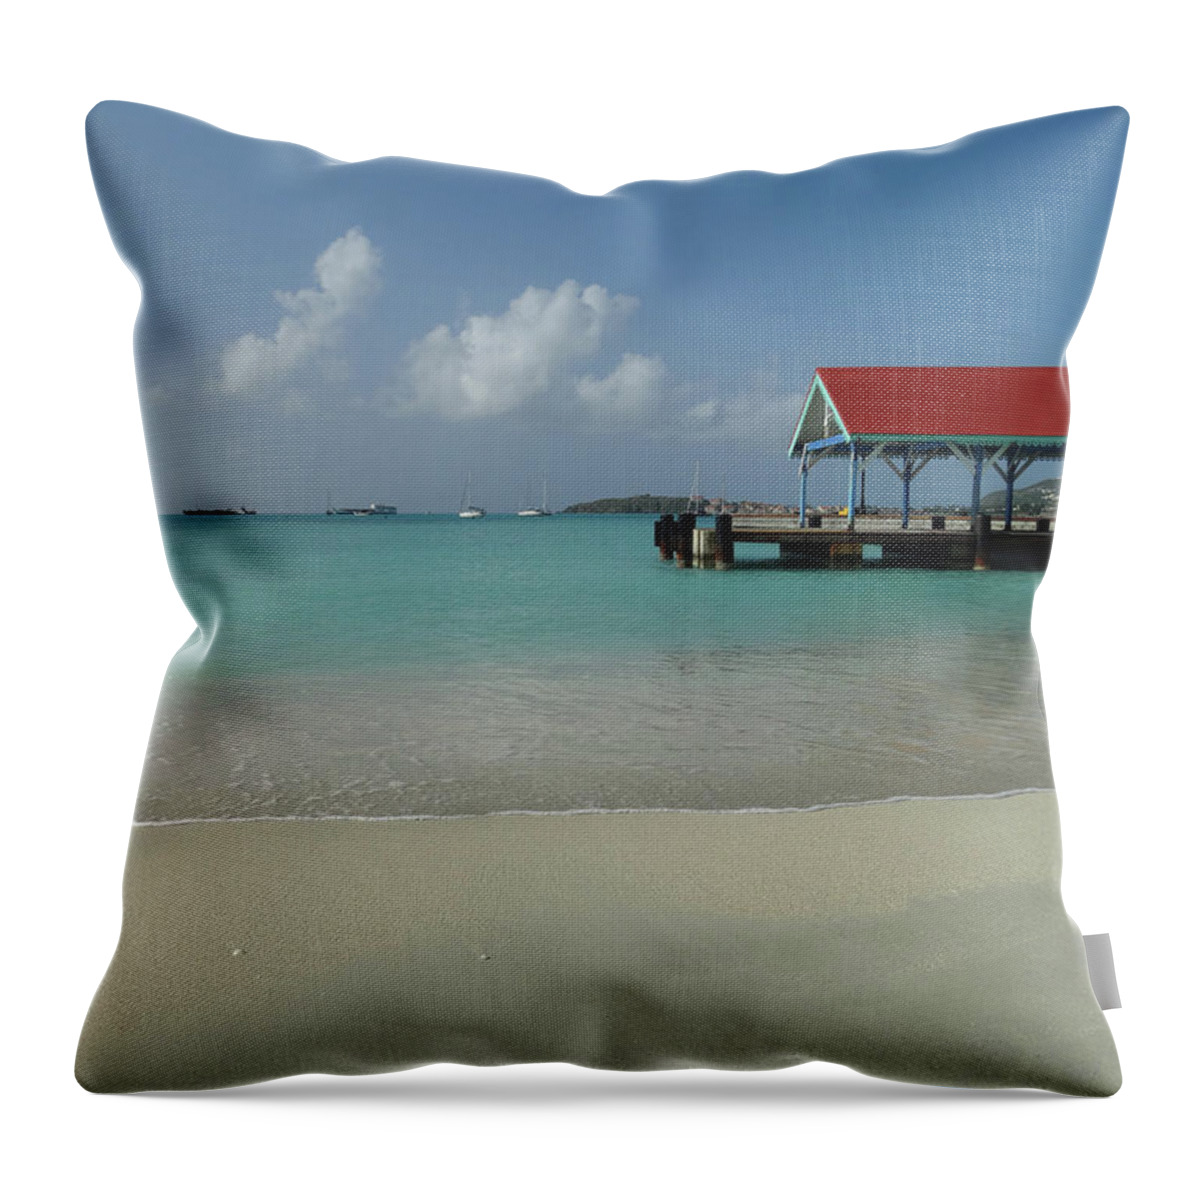 Ocean Scene Throw Pillow featuring the photograph Saint Martin Beach by Mike McGlothlen